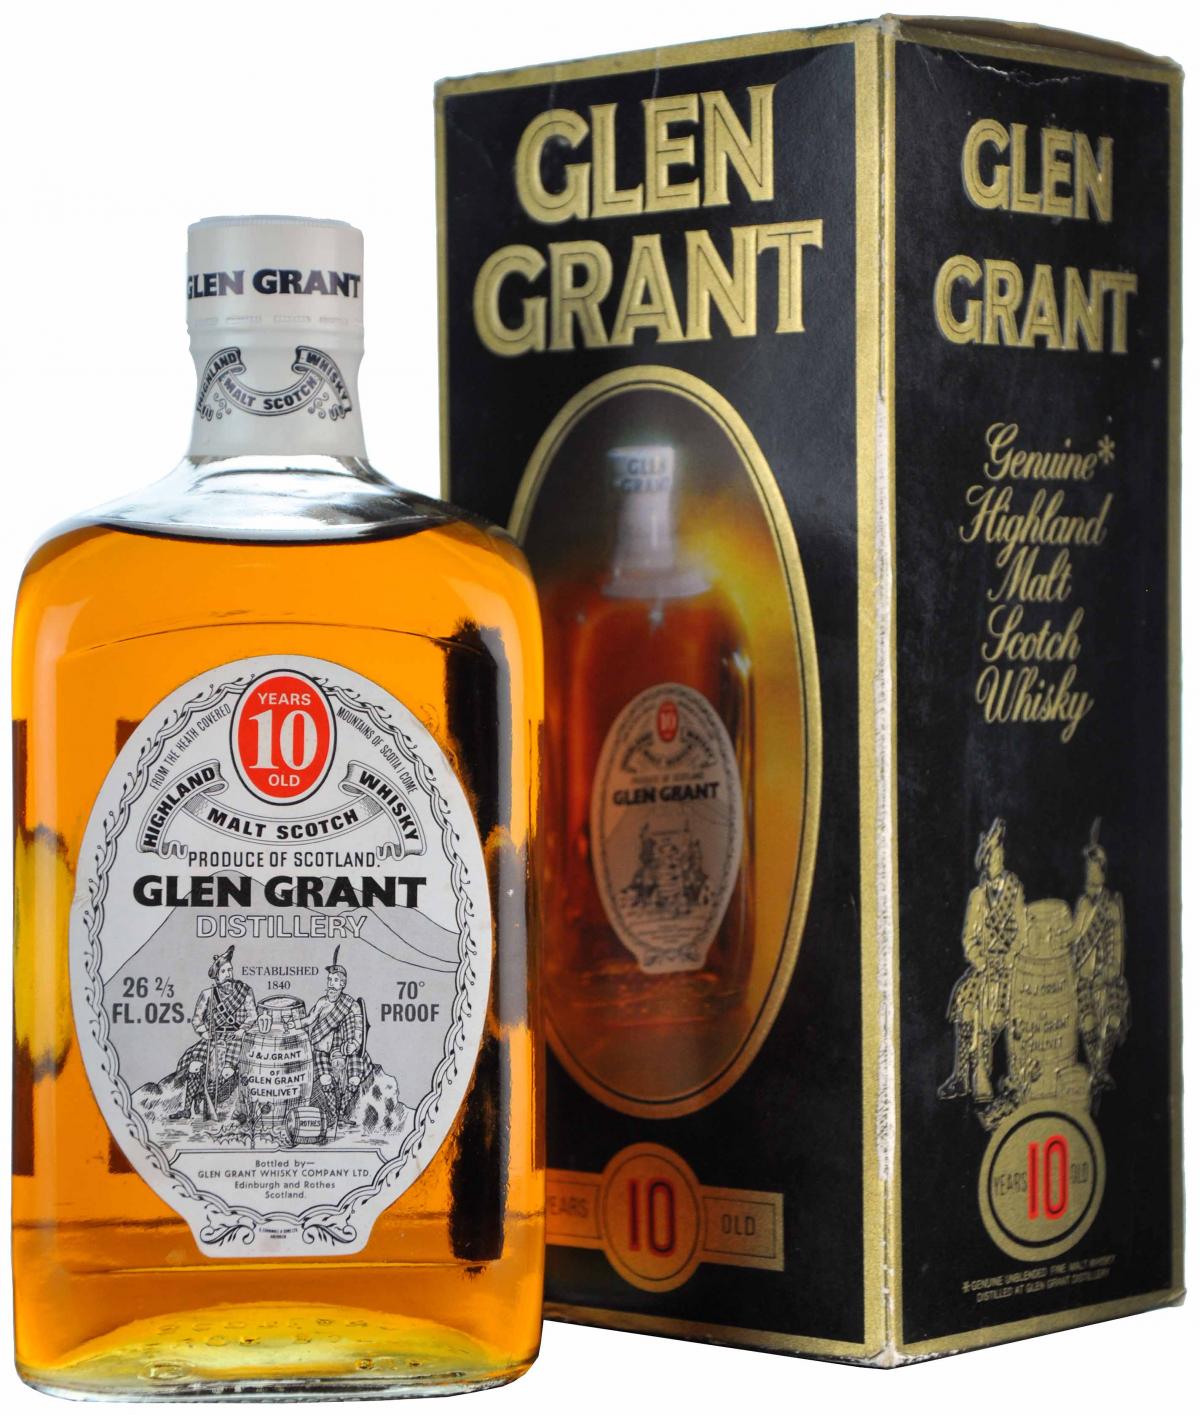 glen grant 10 year old, speyside single malt scotch whisky